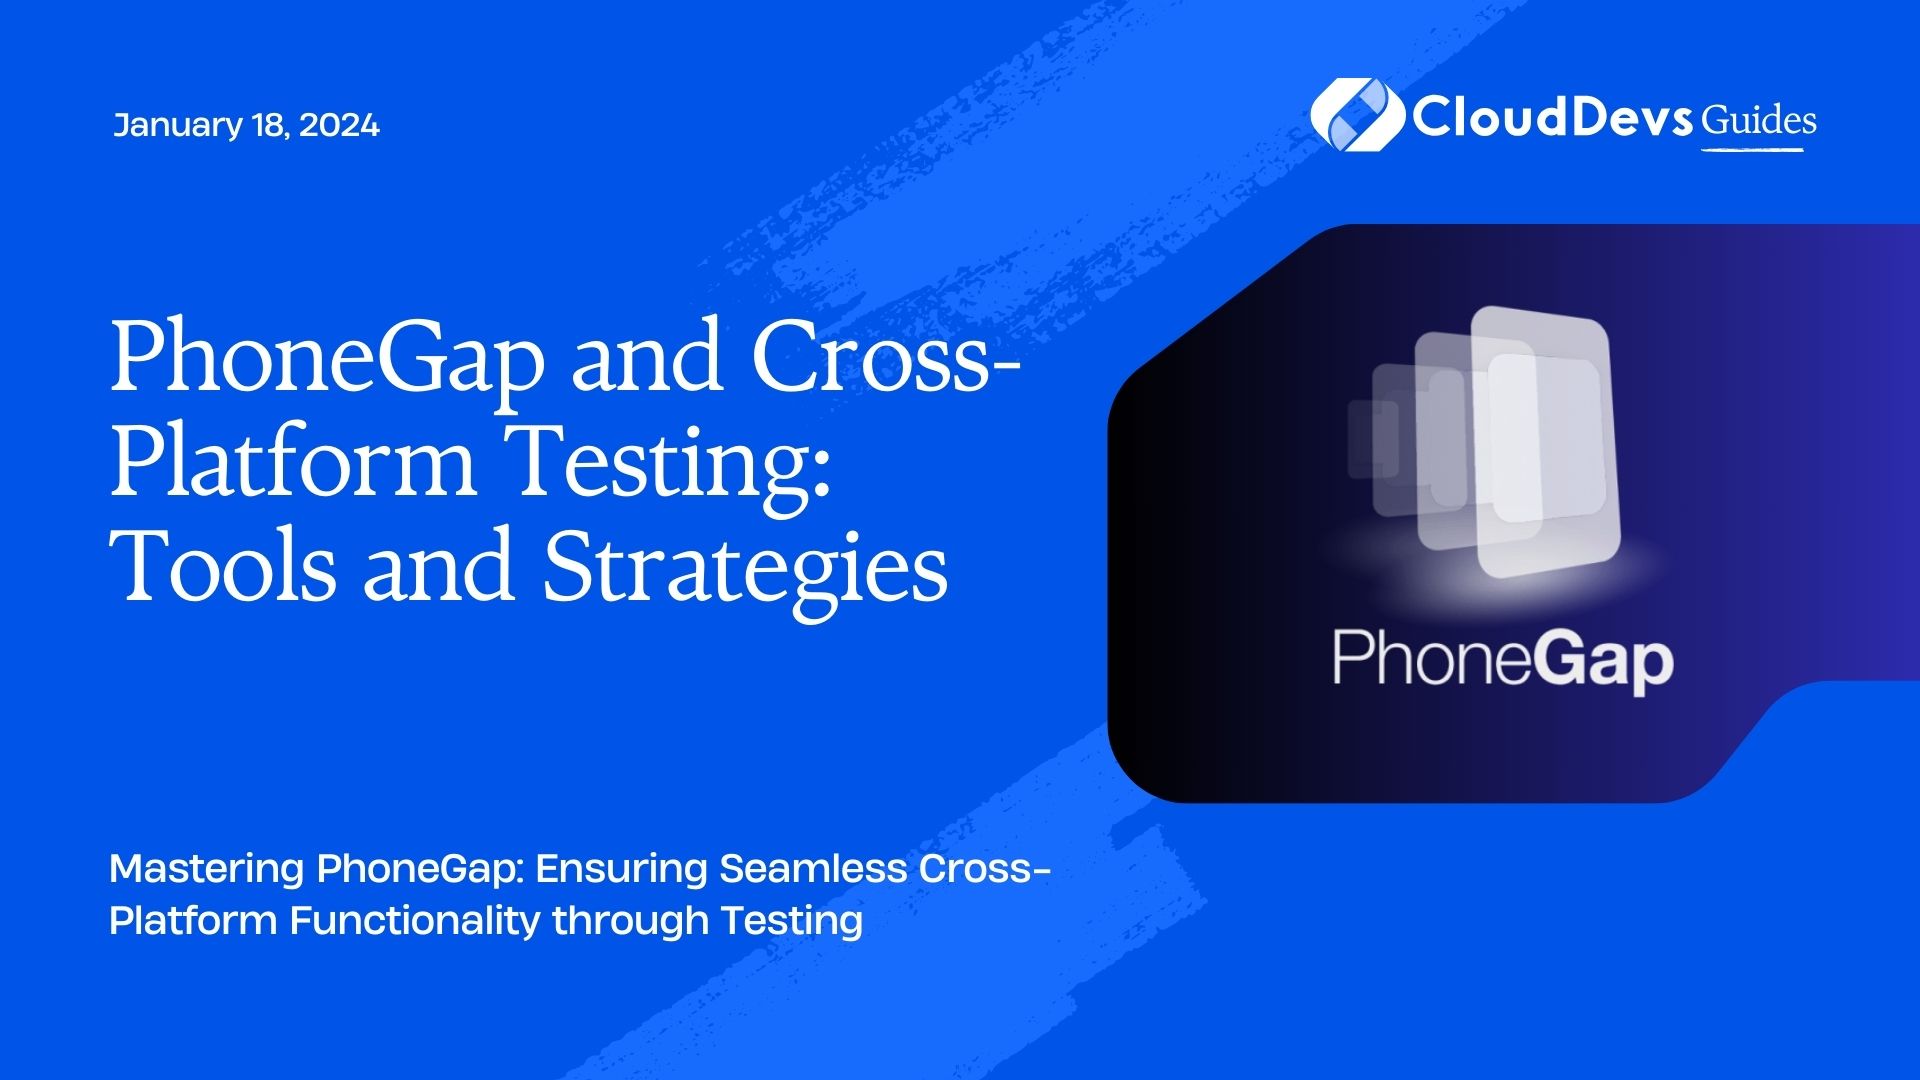 PhoneGap and Cross-Platform Testing: Tools and Strategies